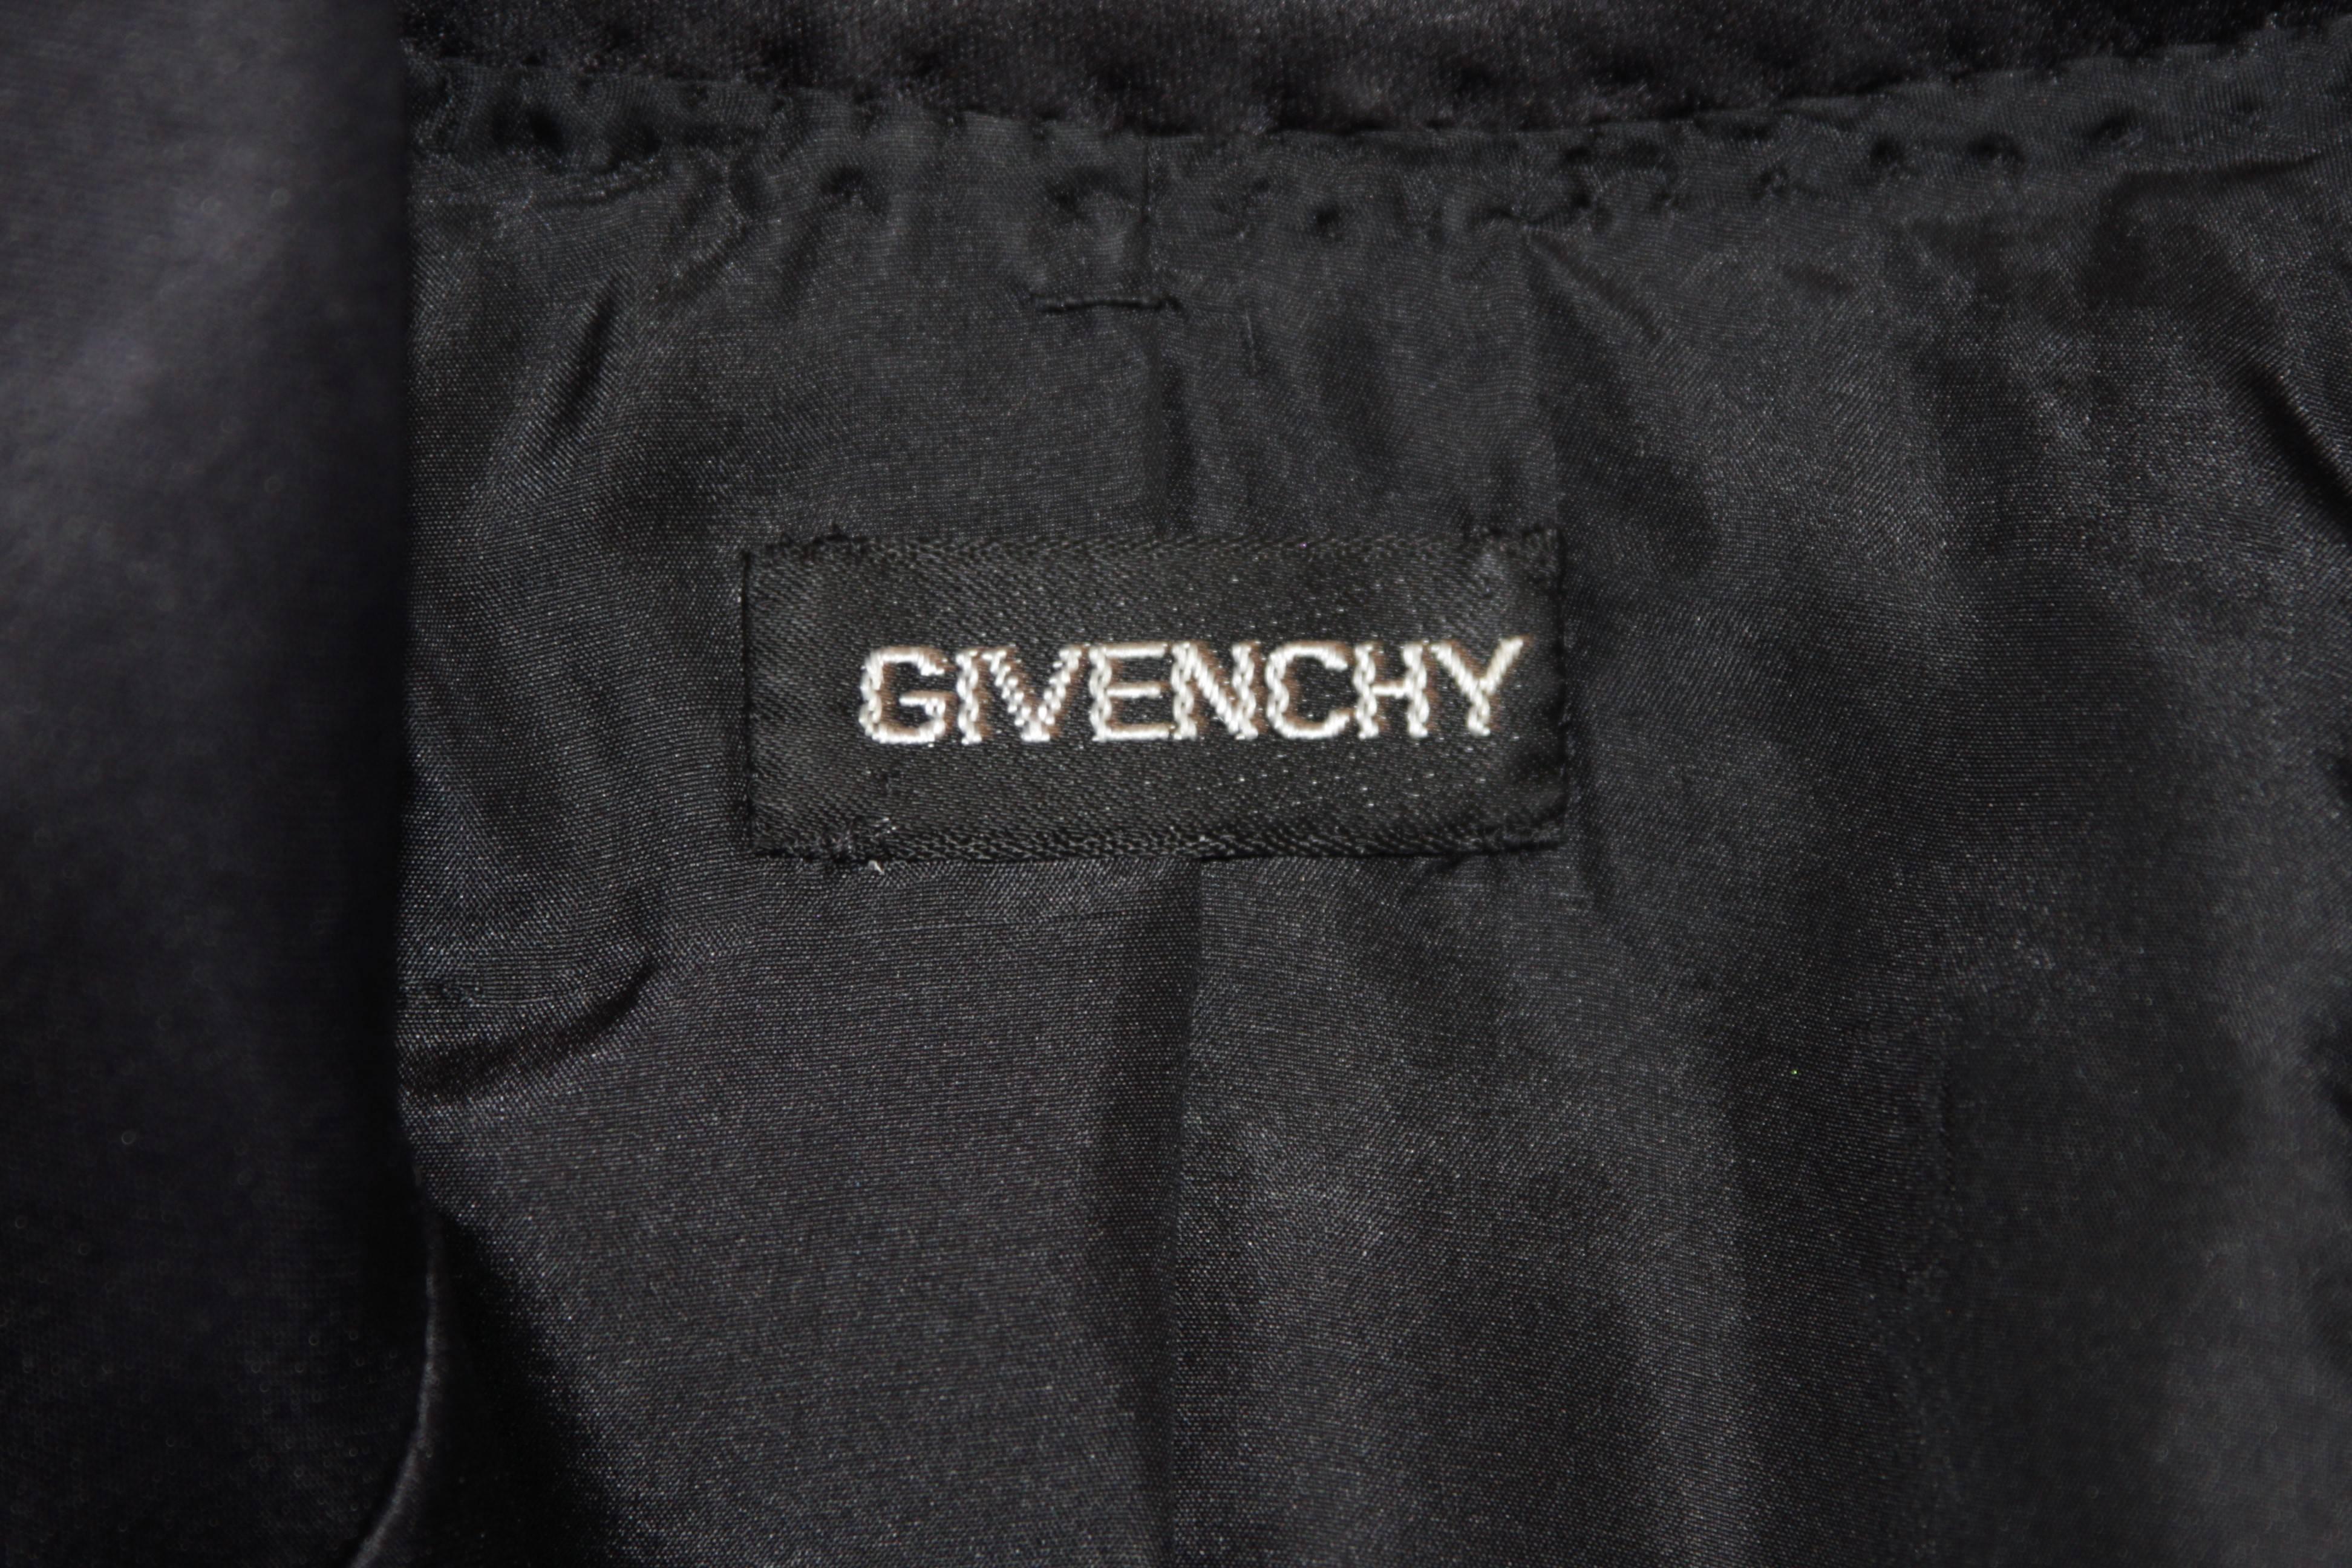 GIVENCHY COUTURE 1980s Black Velvet Floral Embroidered Embellished Suit Size 4-6 5